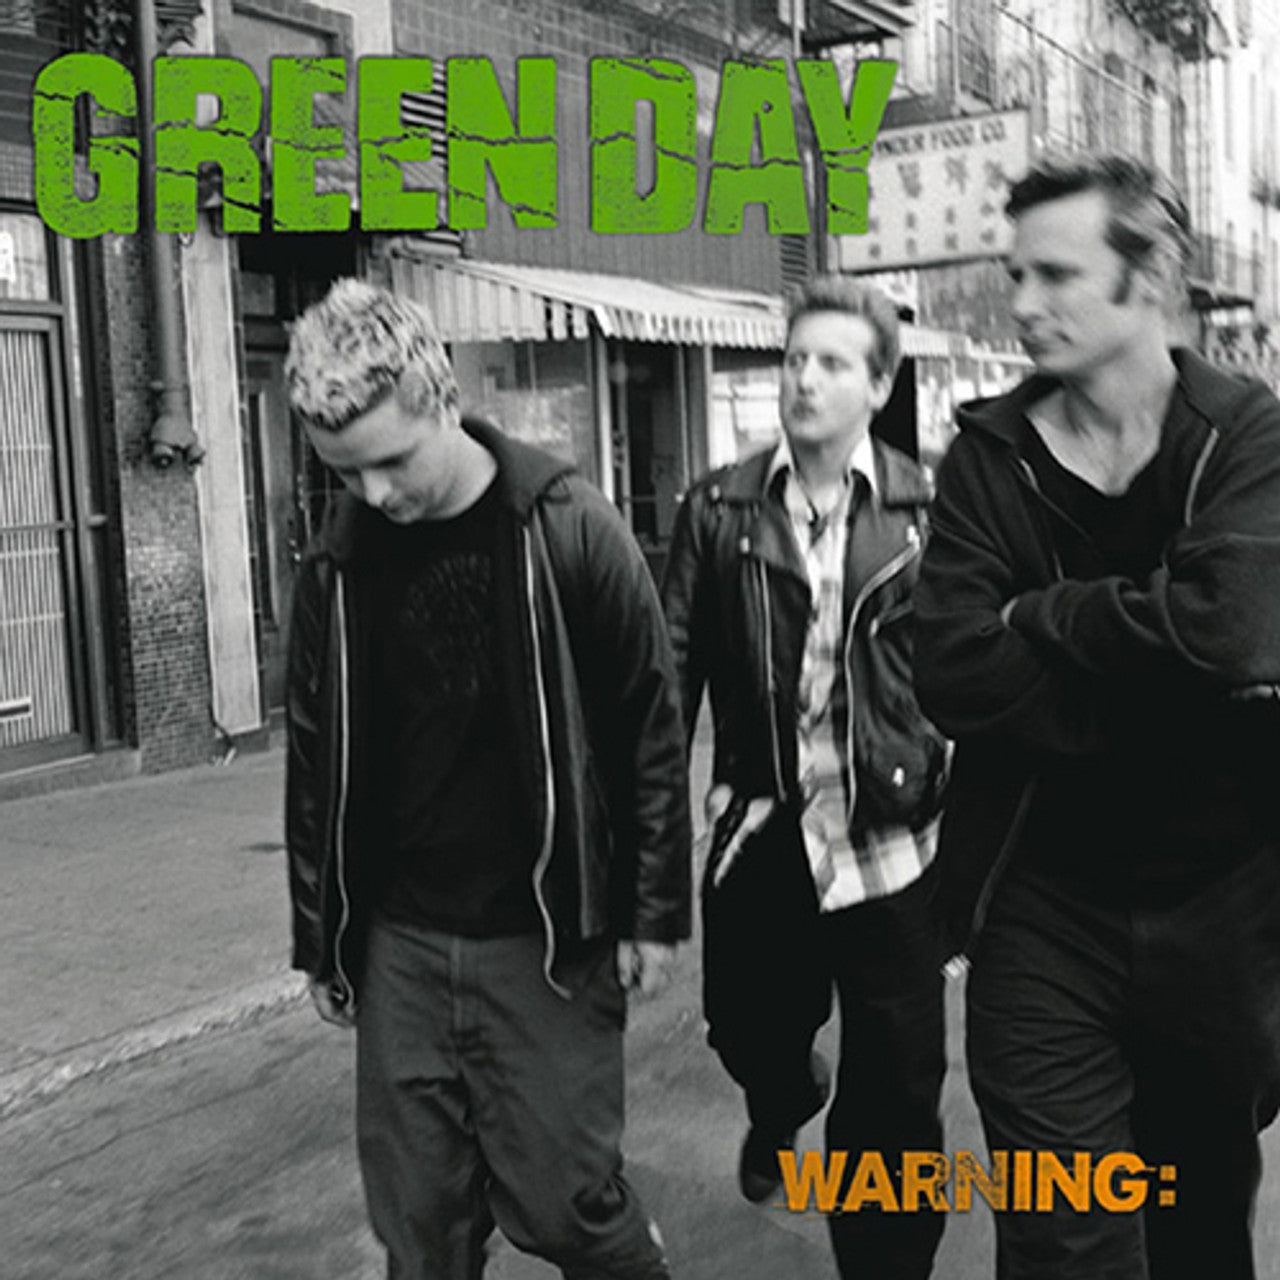 Green Day - Warning: Limited Fluorescent Green Vinyl LP